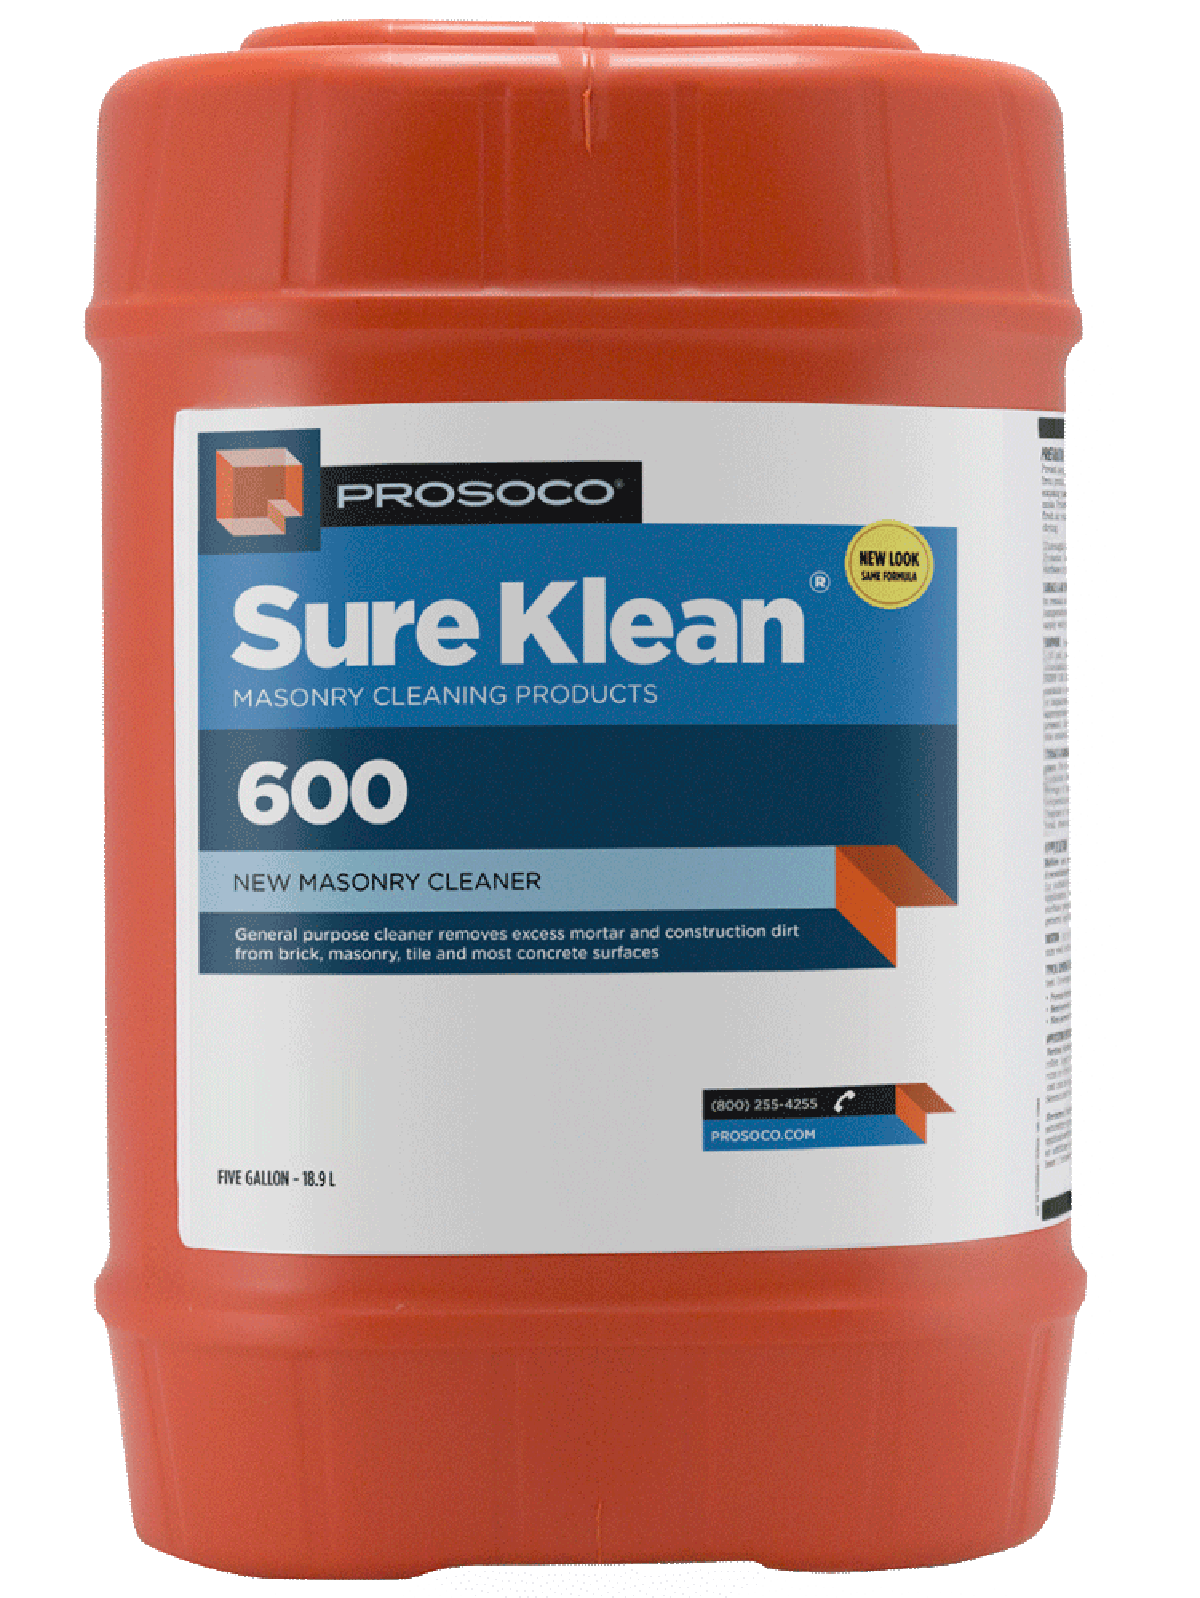 Prosoco Sure Klean 600 5 Gal Masonry Cleaner - Masonry Tools & Supplies